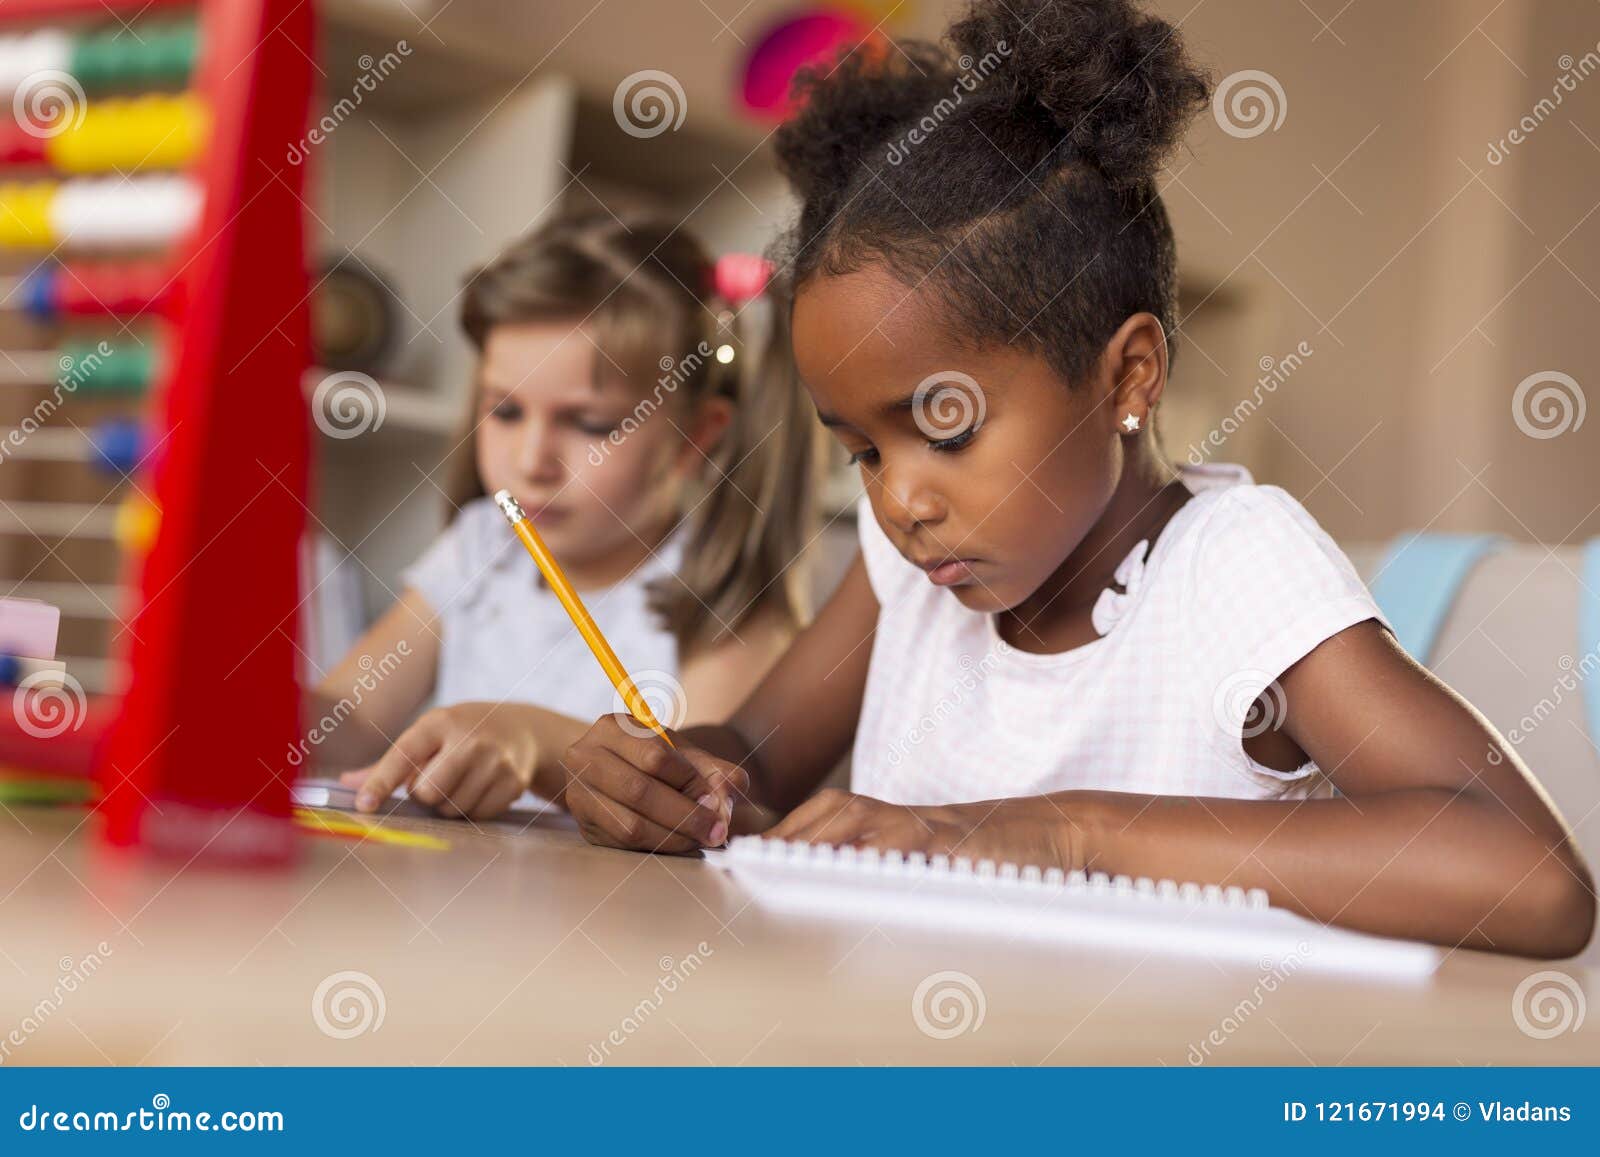 child doing math homework